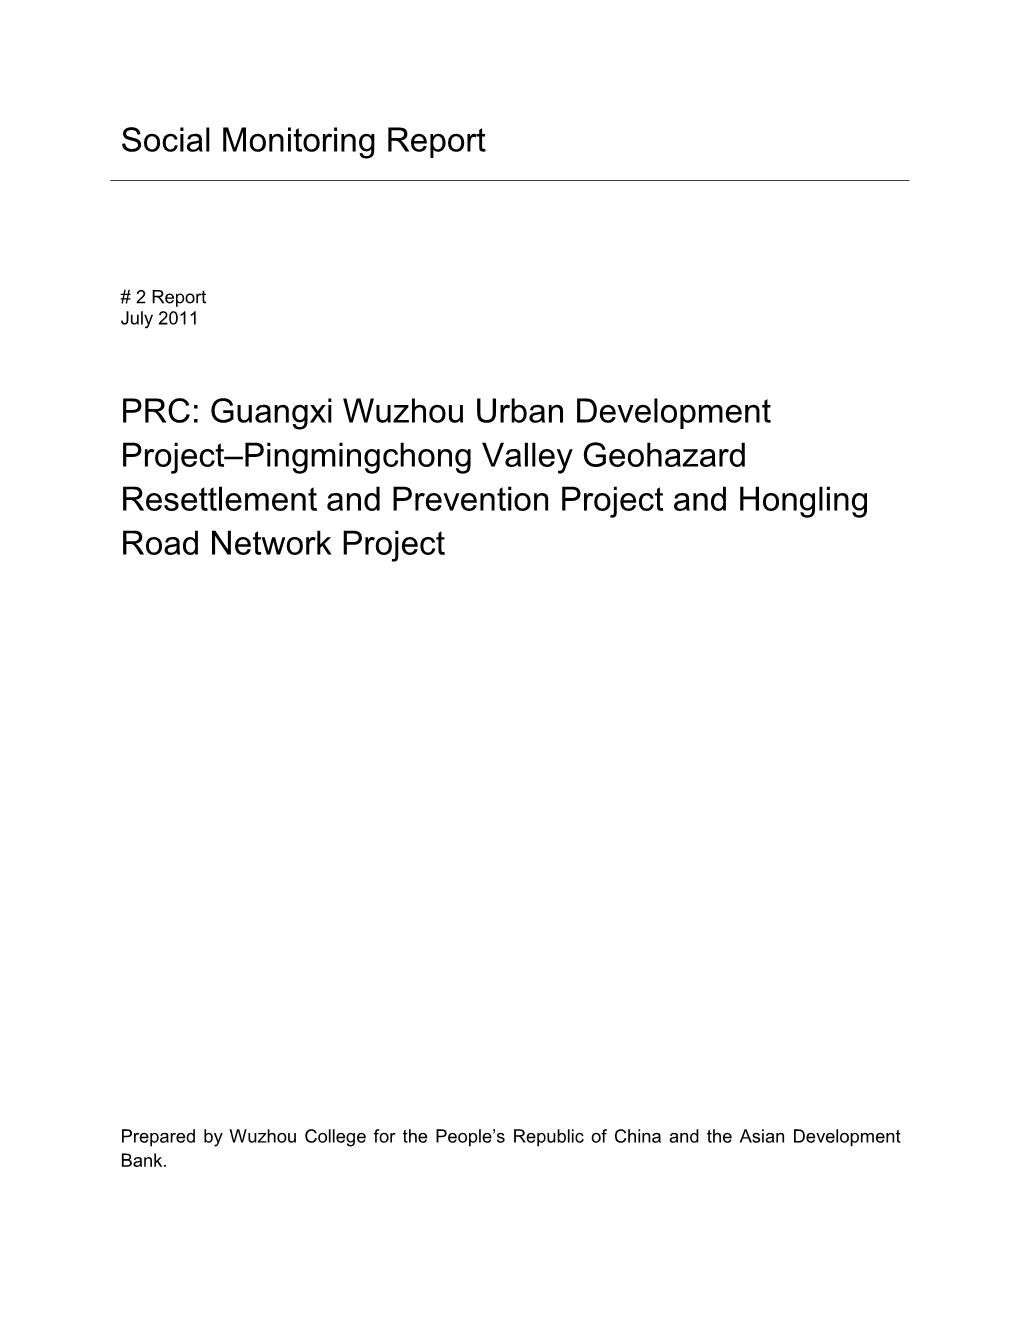 SMR: PRC: Guangxi Wuzhou Urban Development Project